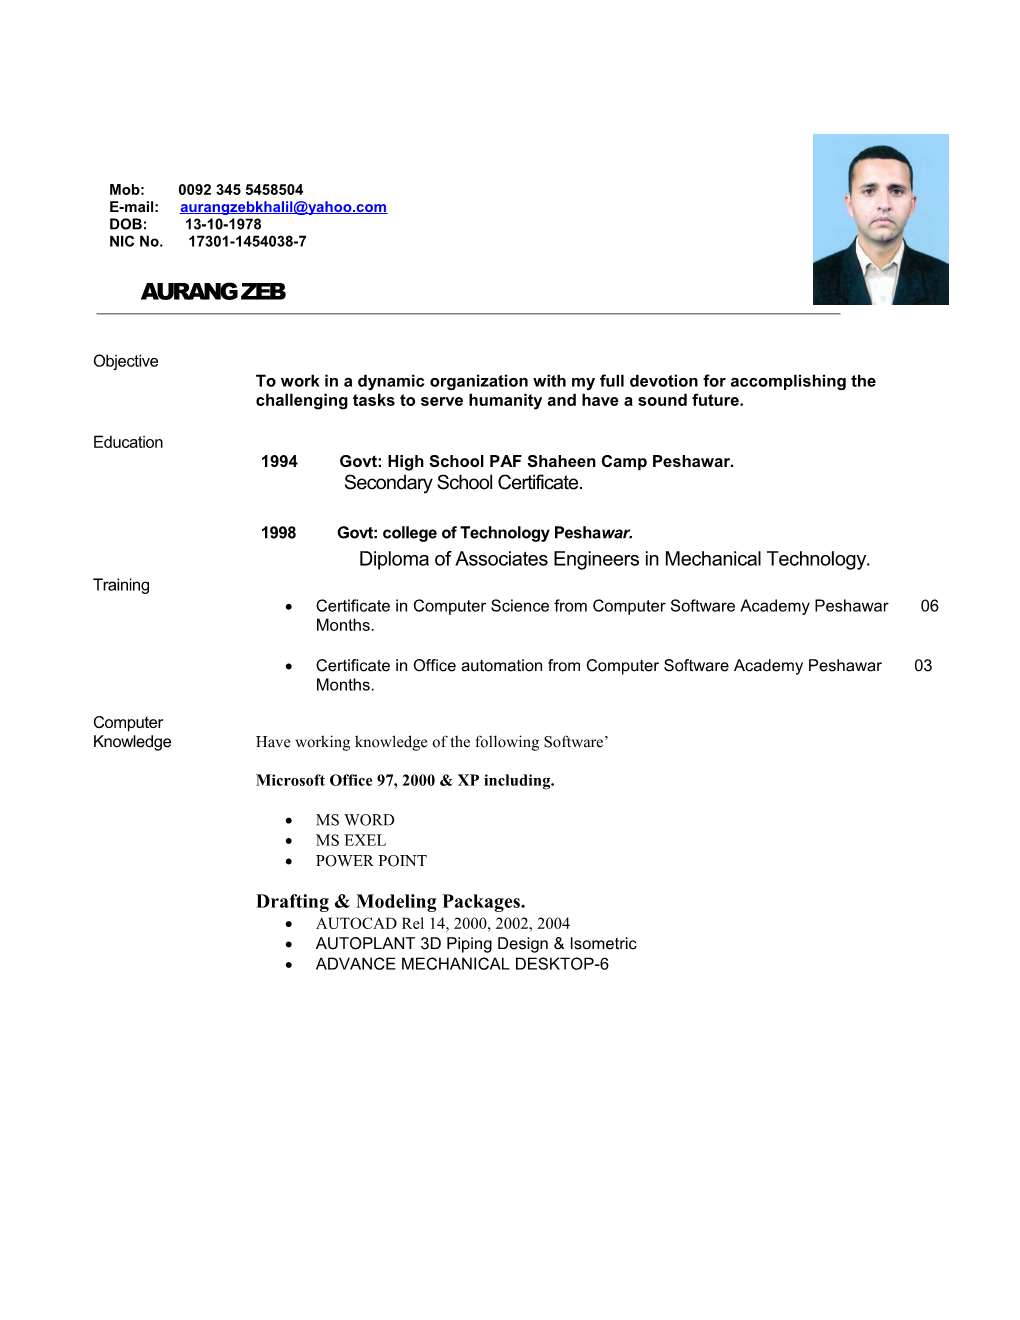 Certificate in Computer Science from Computersoftwareacademypeshawar 06 Months